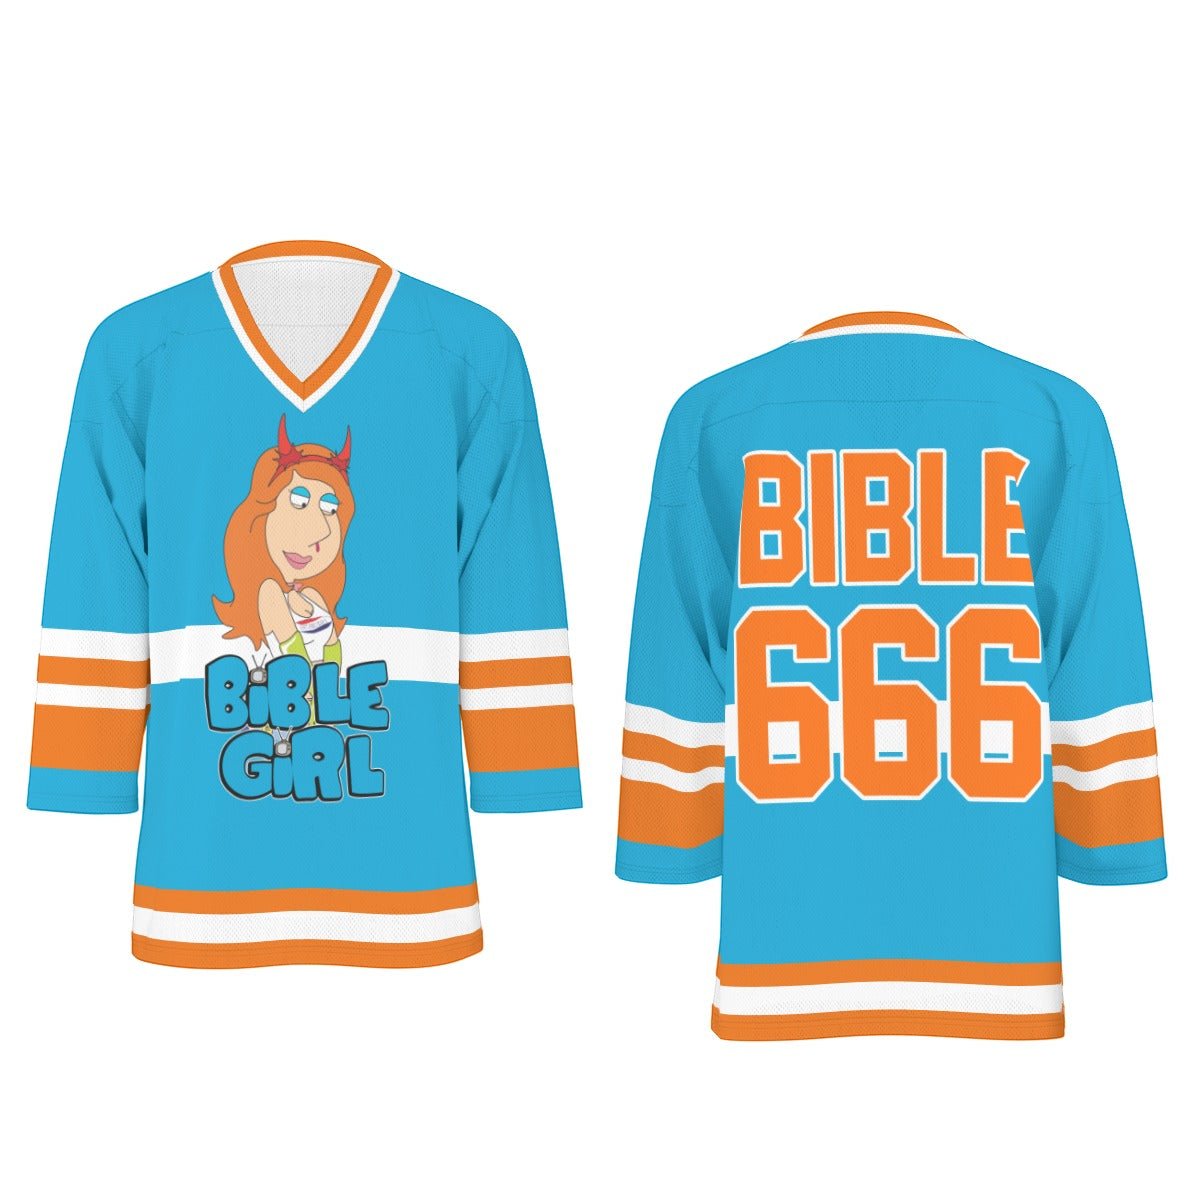 Bible Girl - Lois Hockey Jersey - dragqueenmerch